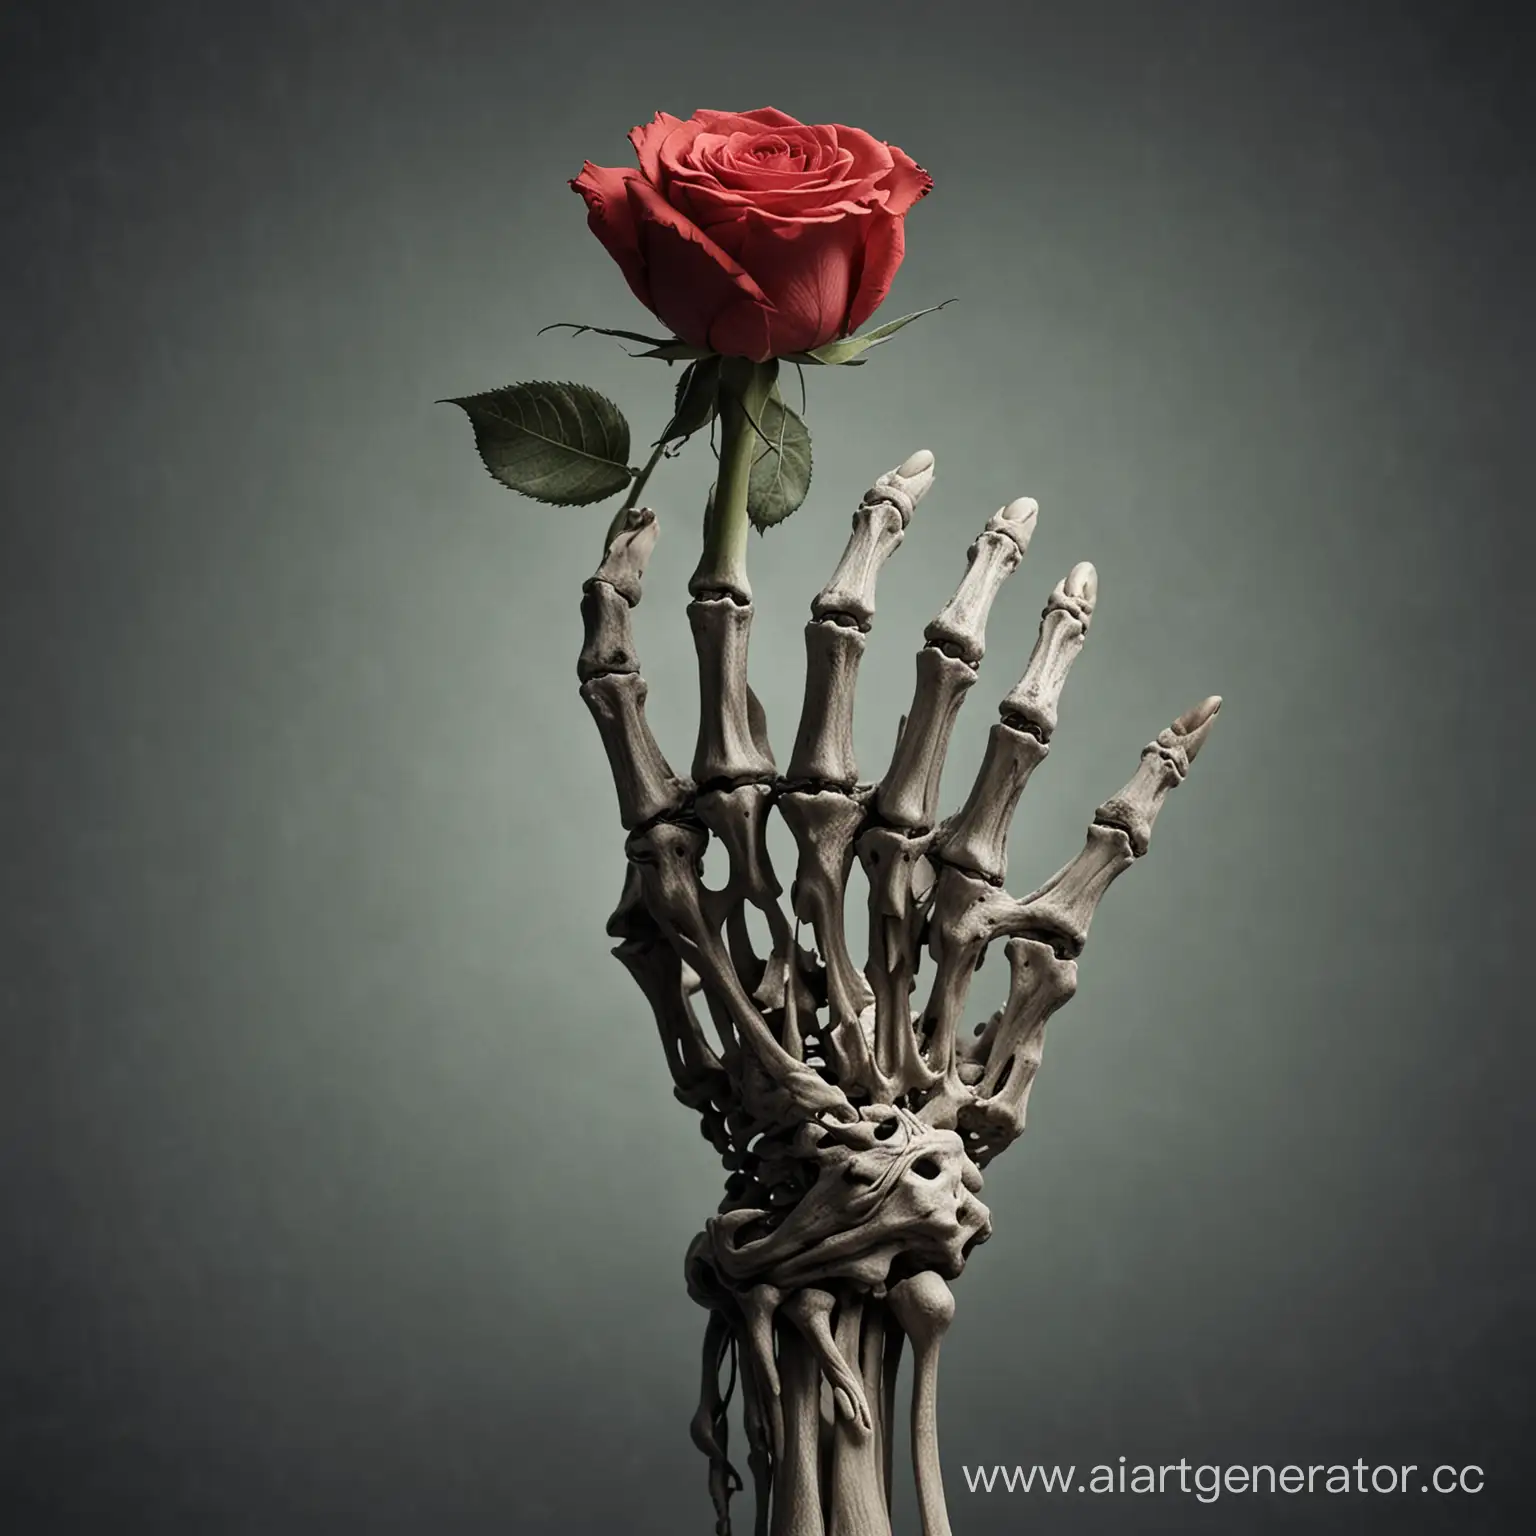 Skeleton-Hand-Holding-Rose-Gothic-Romance-and-Death-Symbolism